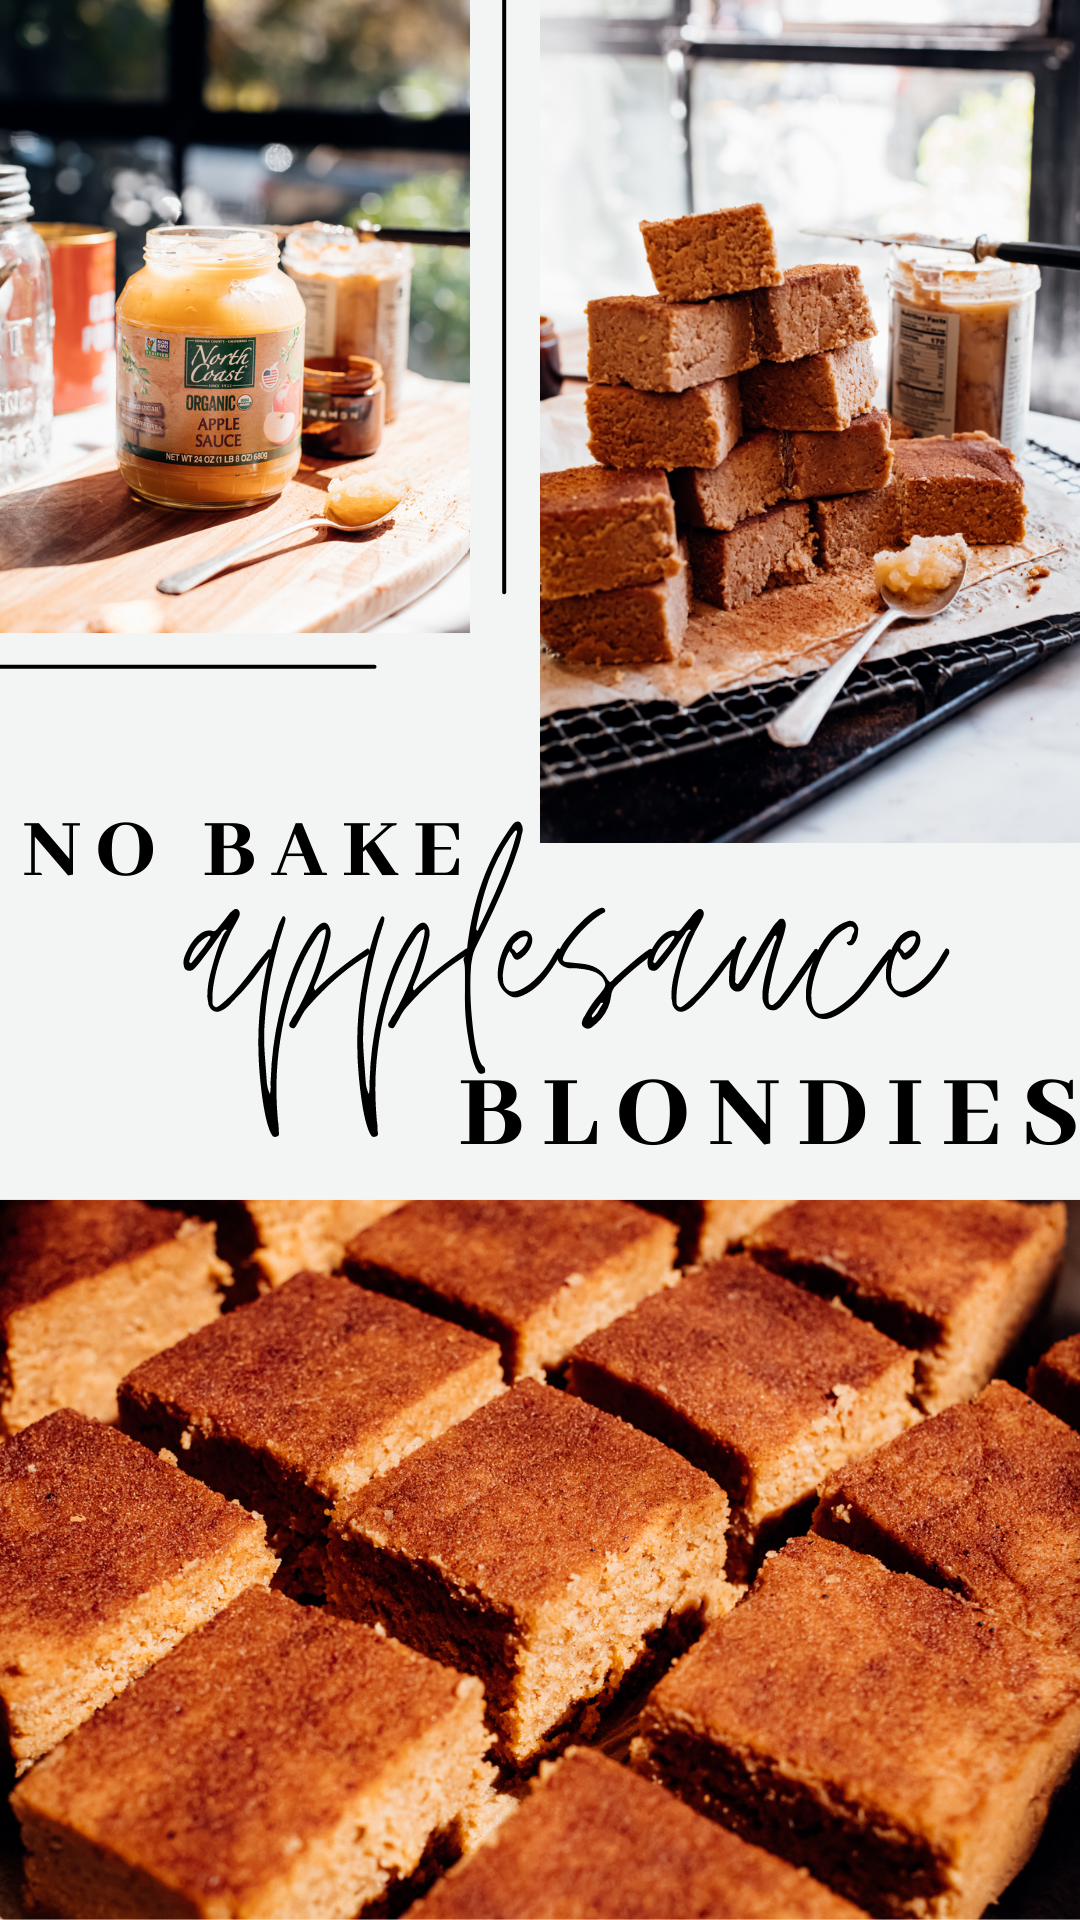 No Bake Applesauce Blondies (Gluten-Free and Vegan)